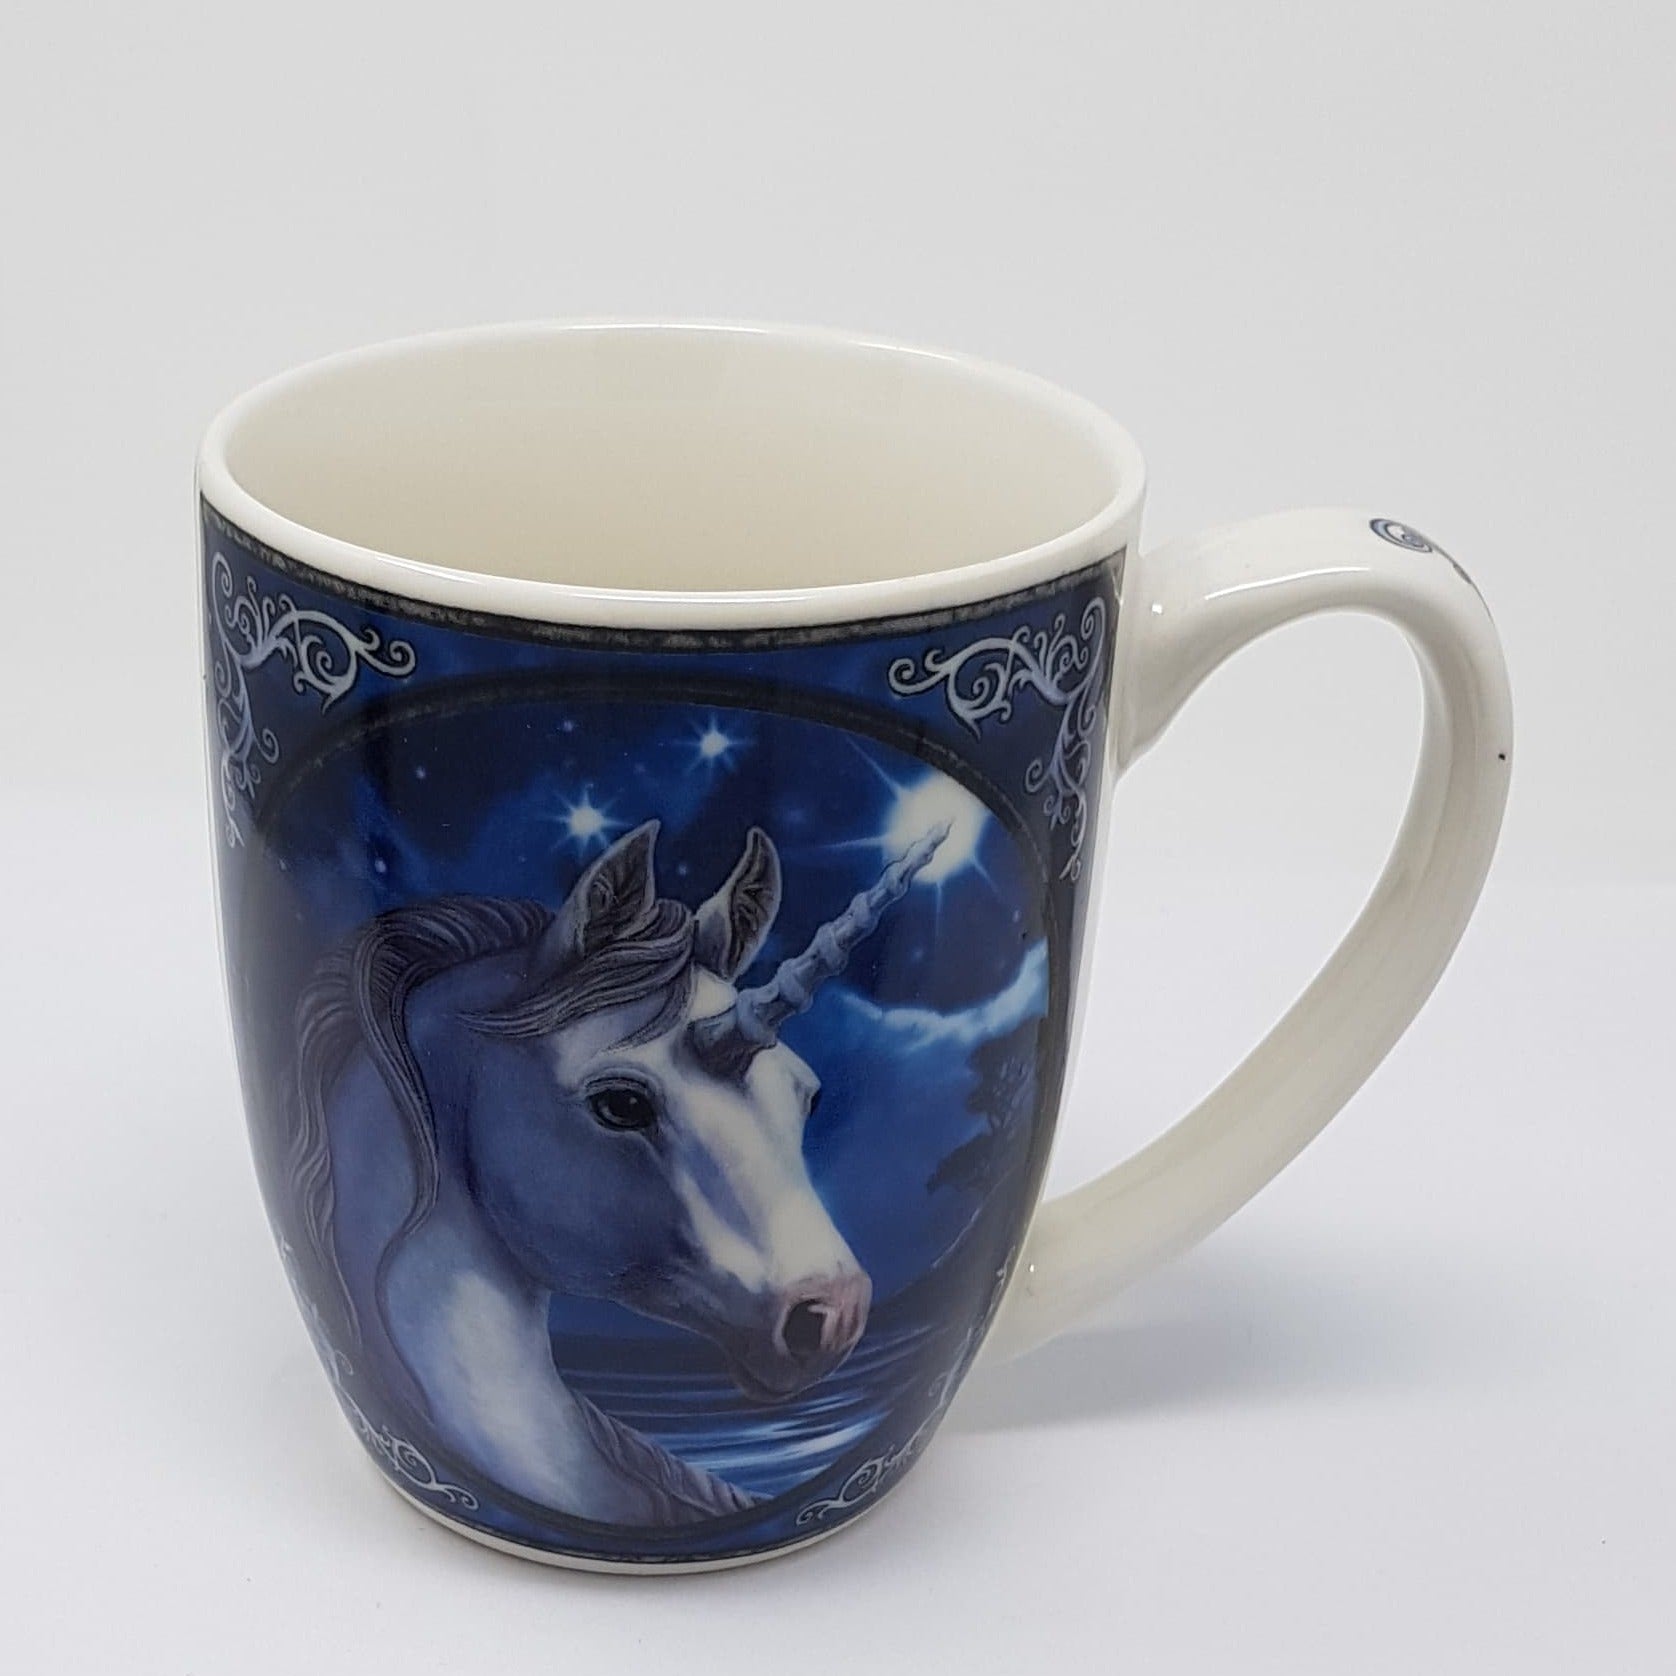 General Gift - Mug / Unicorn 'The Sacred One'